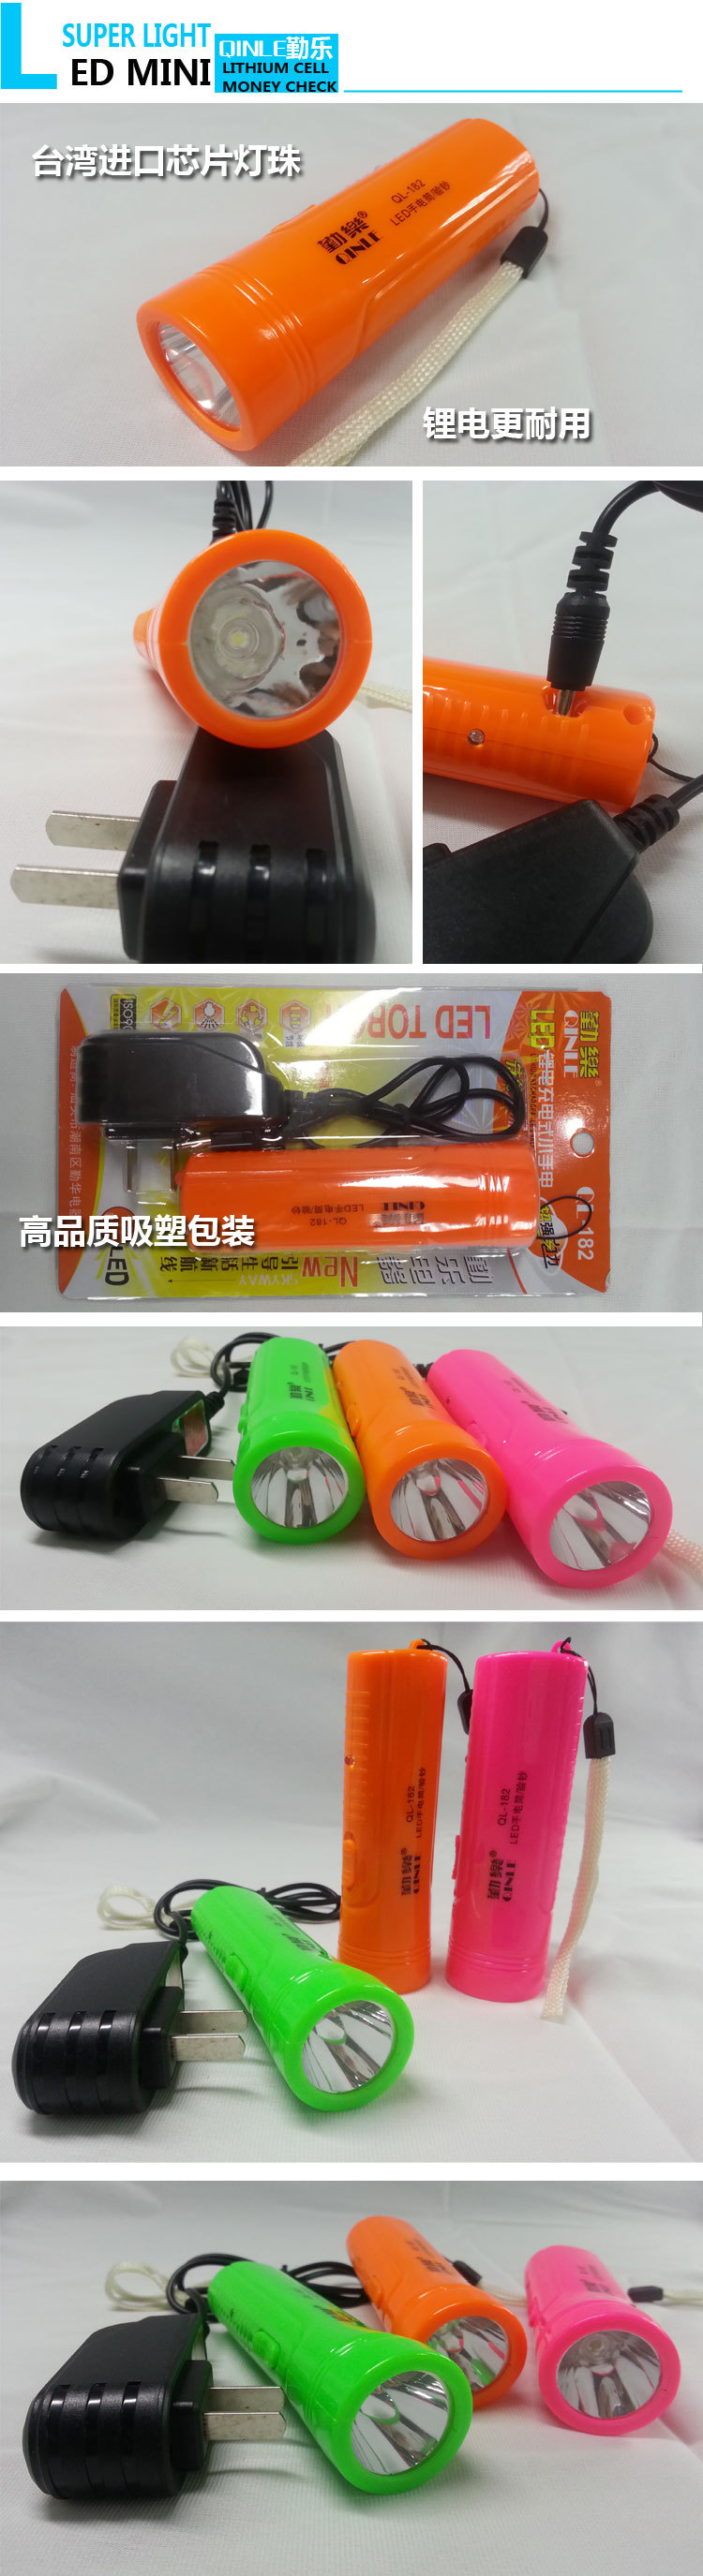 QL-182 LED 塑料礼品创意随身MINI迷你尔锂电验钞灯小手电筒示例图3